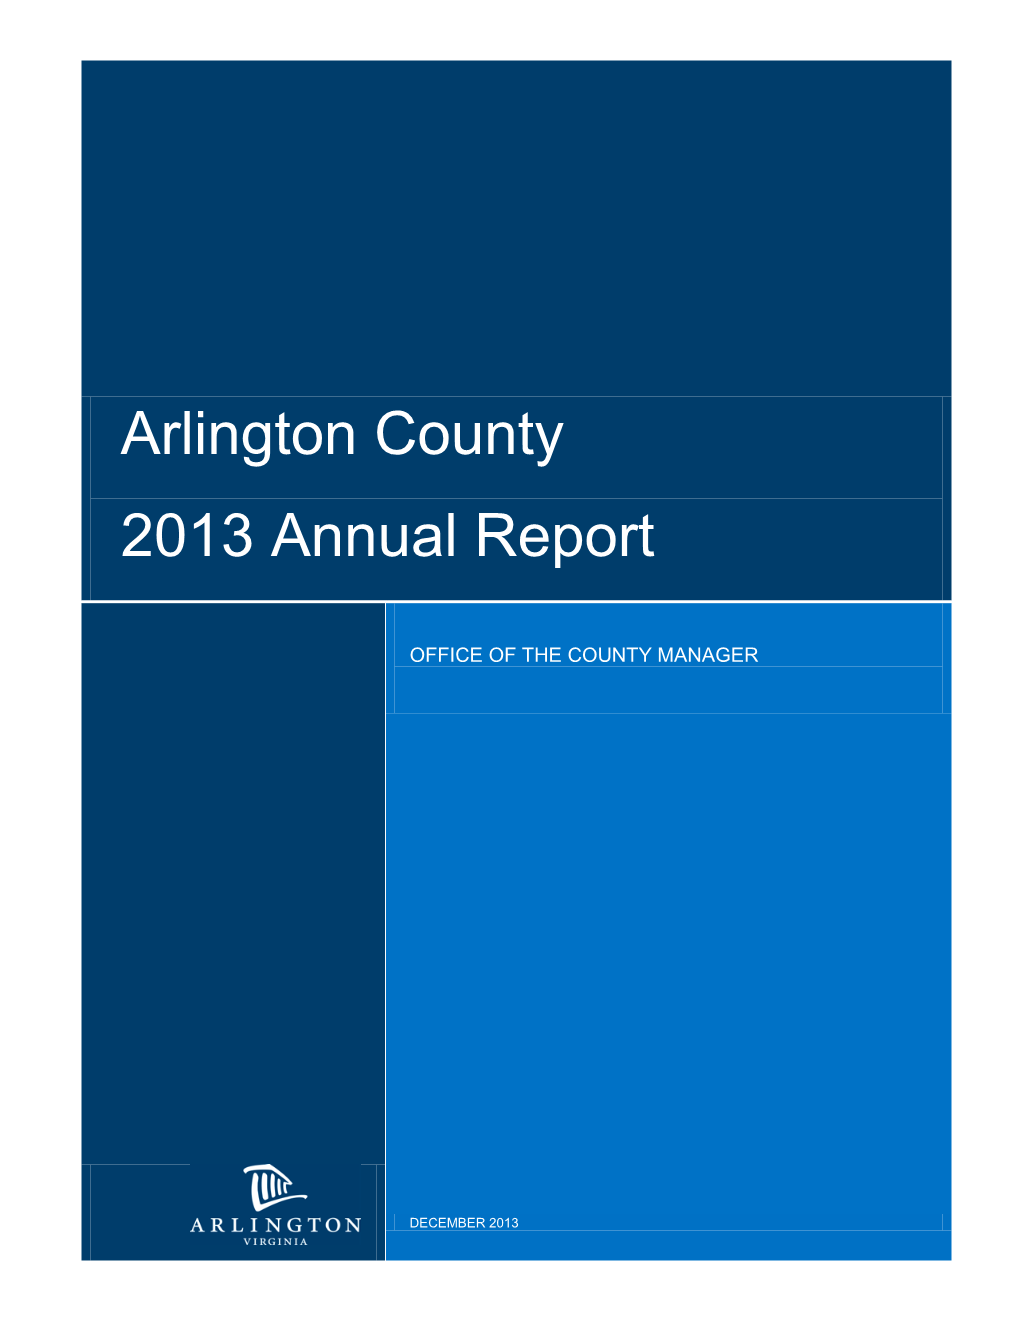 Arlington County 2013 Annual Report